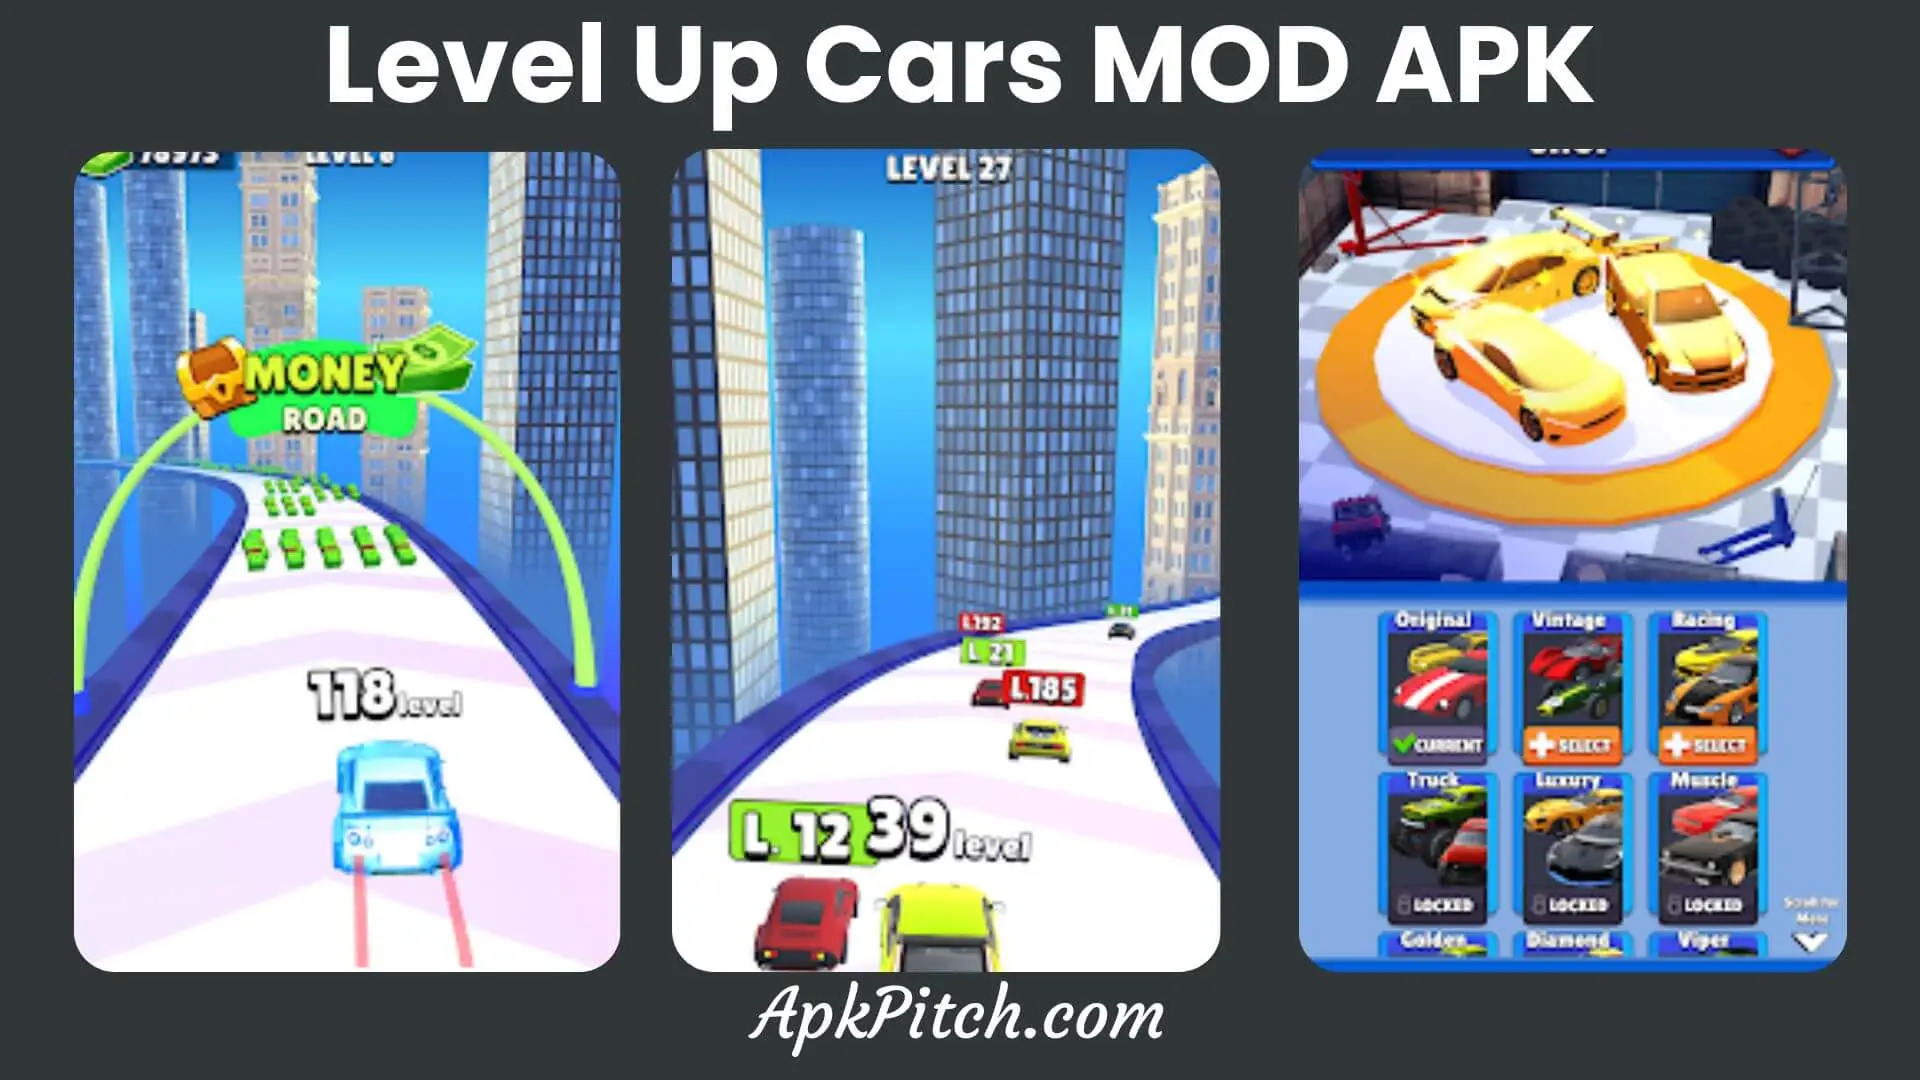 Level Up Cars MOD APK Free Download